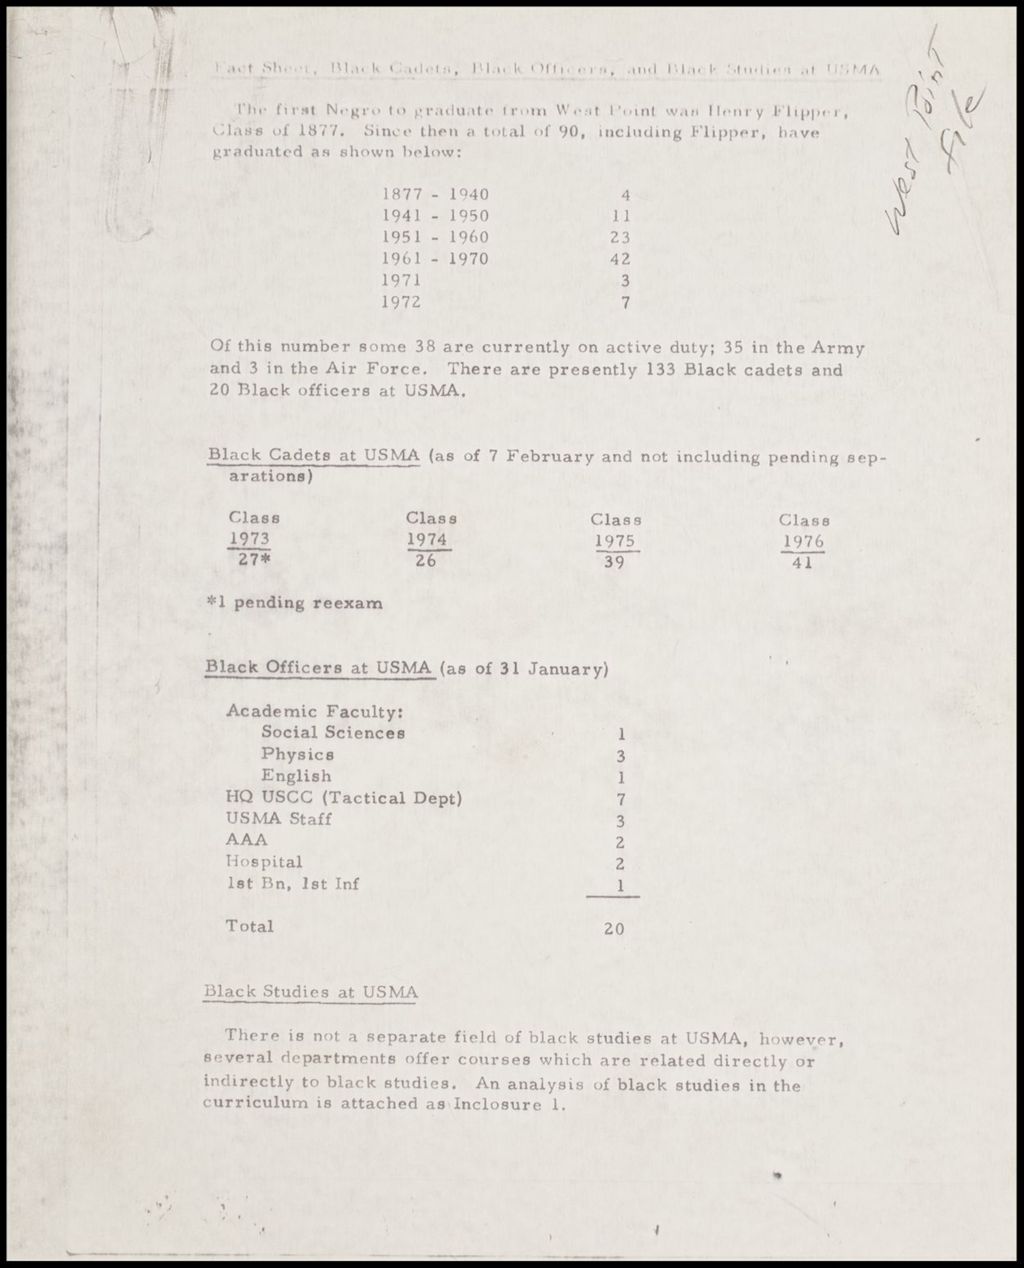 Miniature of West Point Bill Case, 1974 (Folder IV-1110)